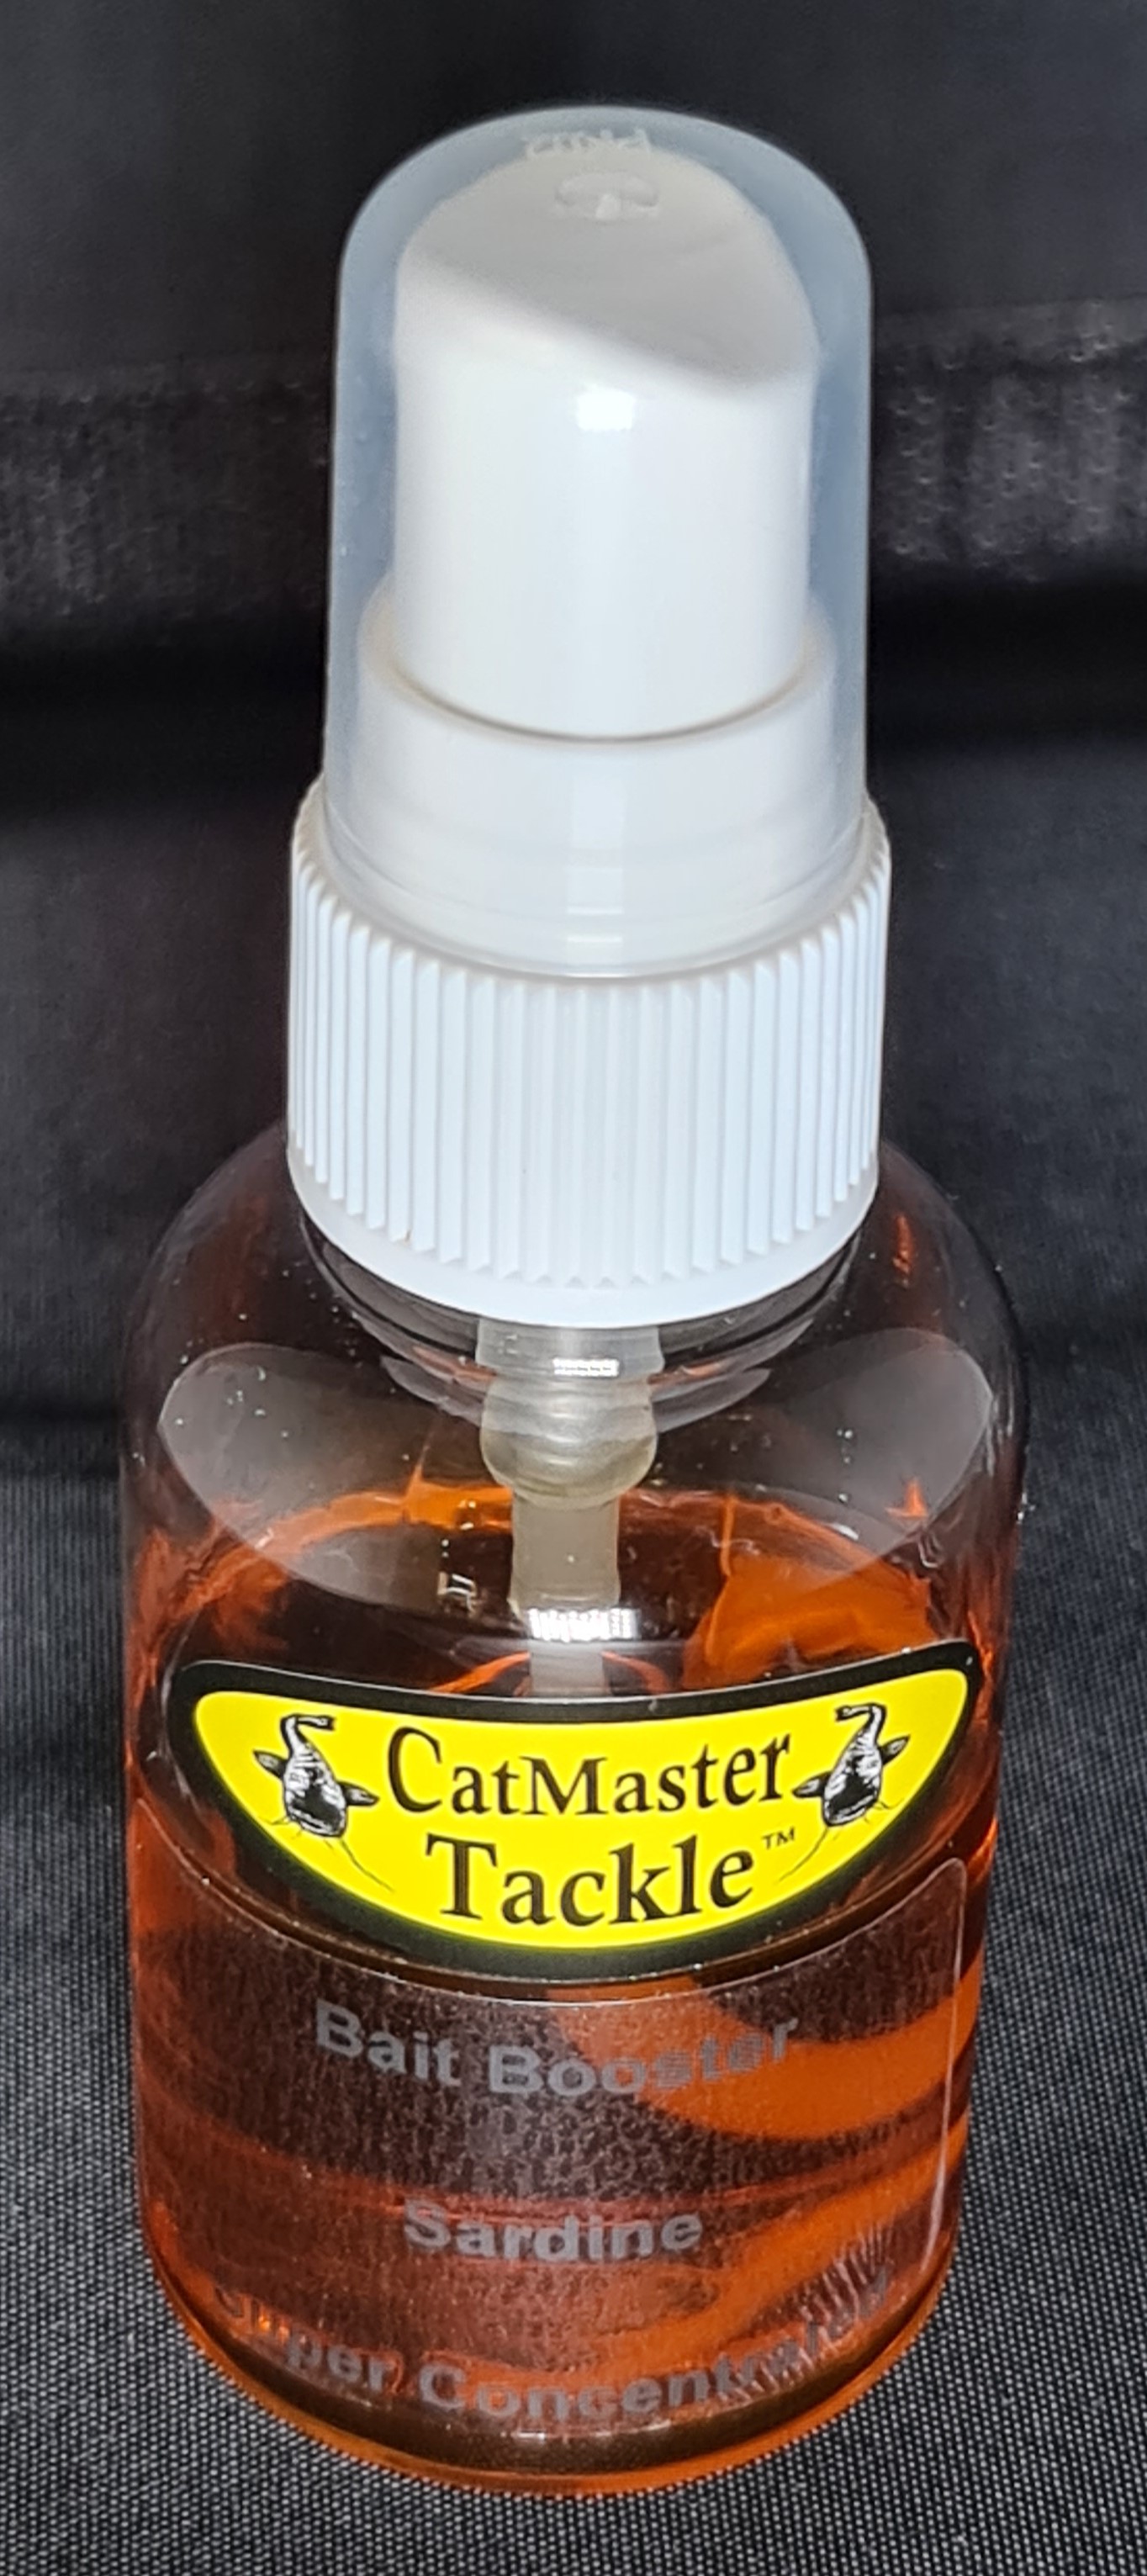 CatMaster Tackle Bait Booster Sardine